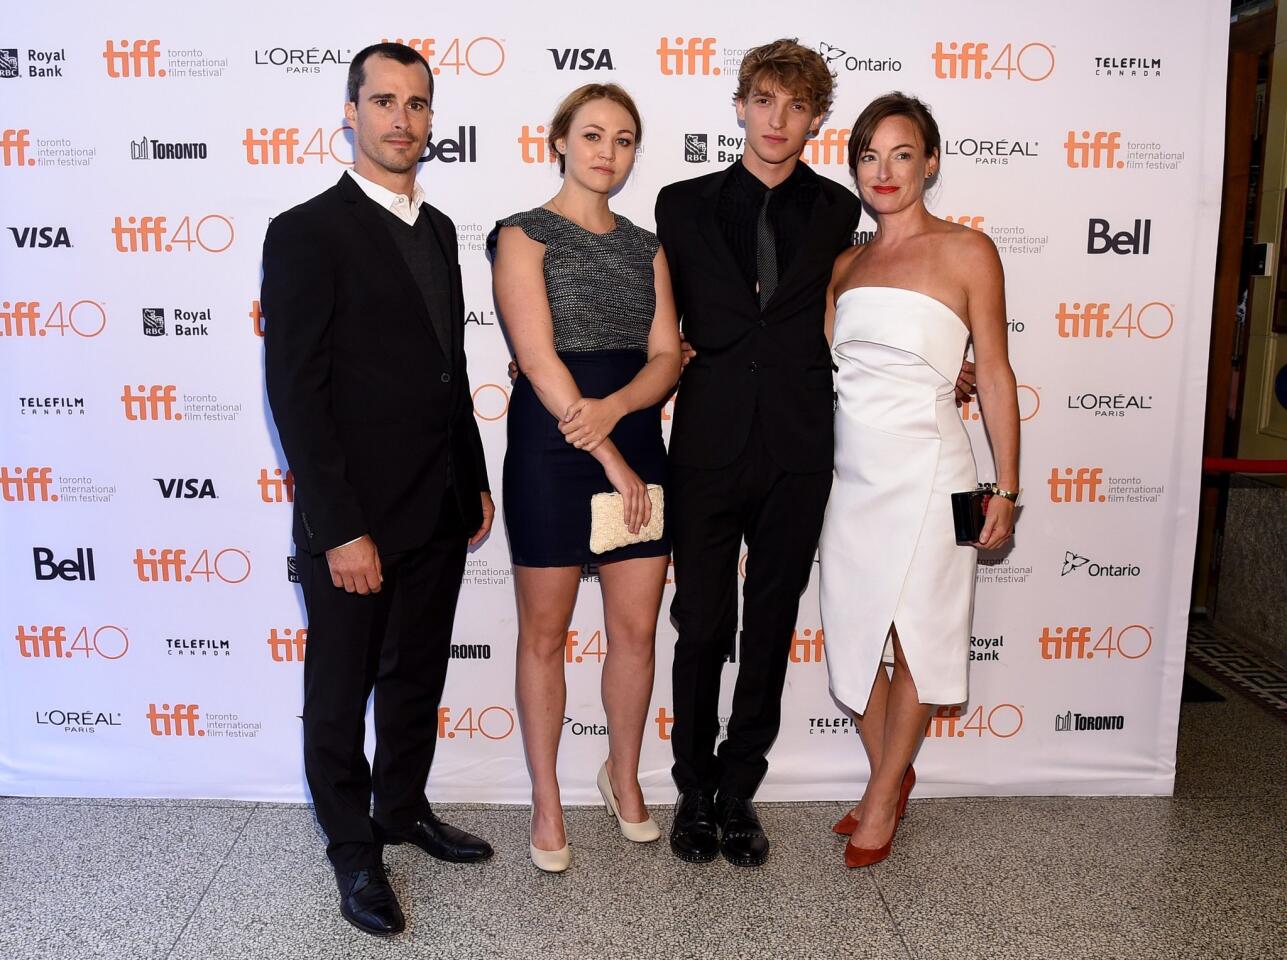 Toronto International Film Festival 2015